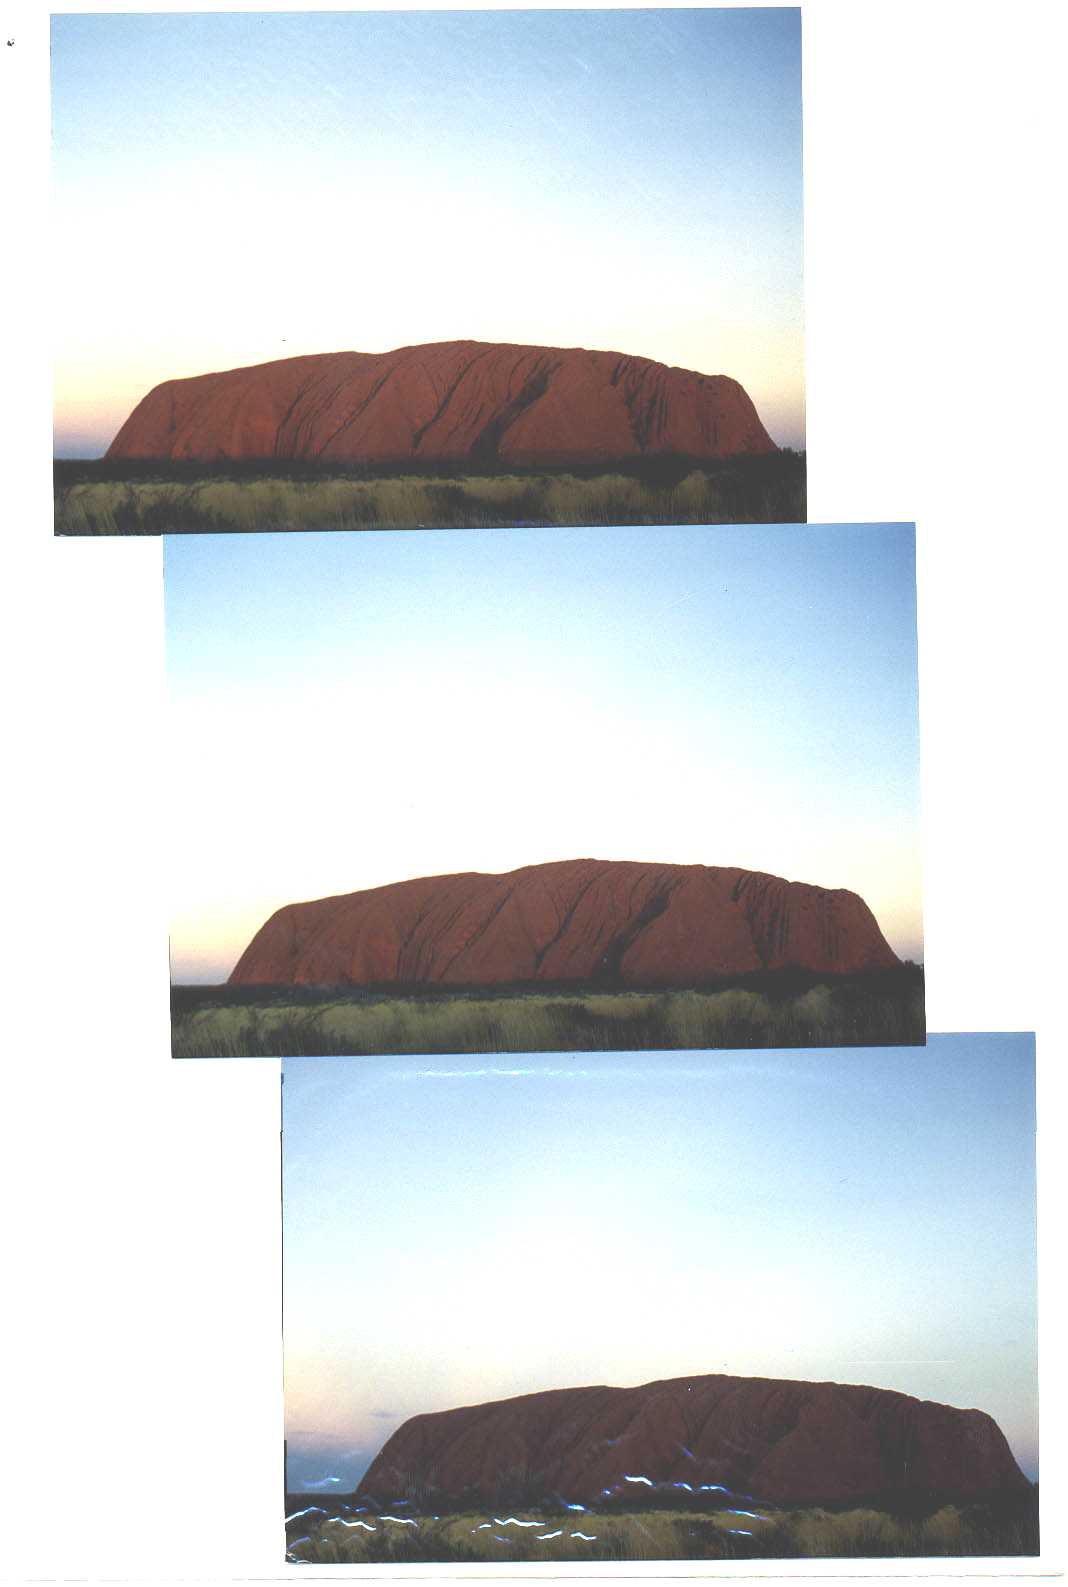 Ayers Rock Australia